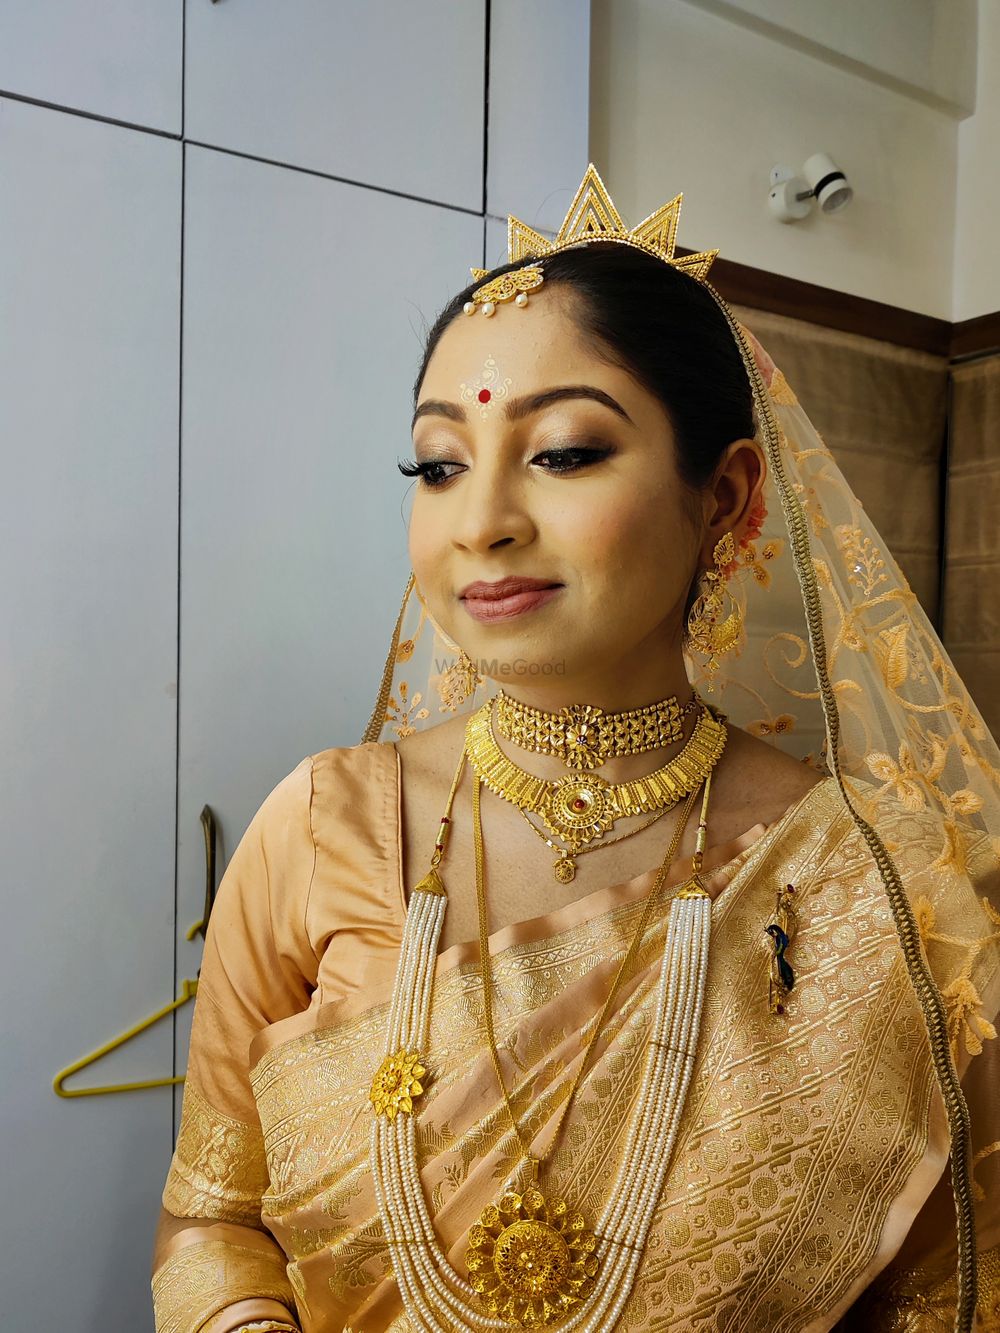 Photo By Sajal Debnath Makeup Artist - Bridal Makeup